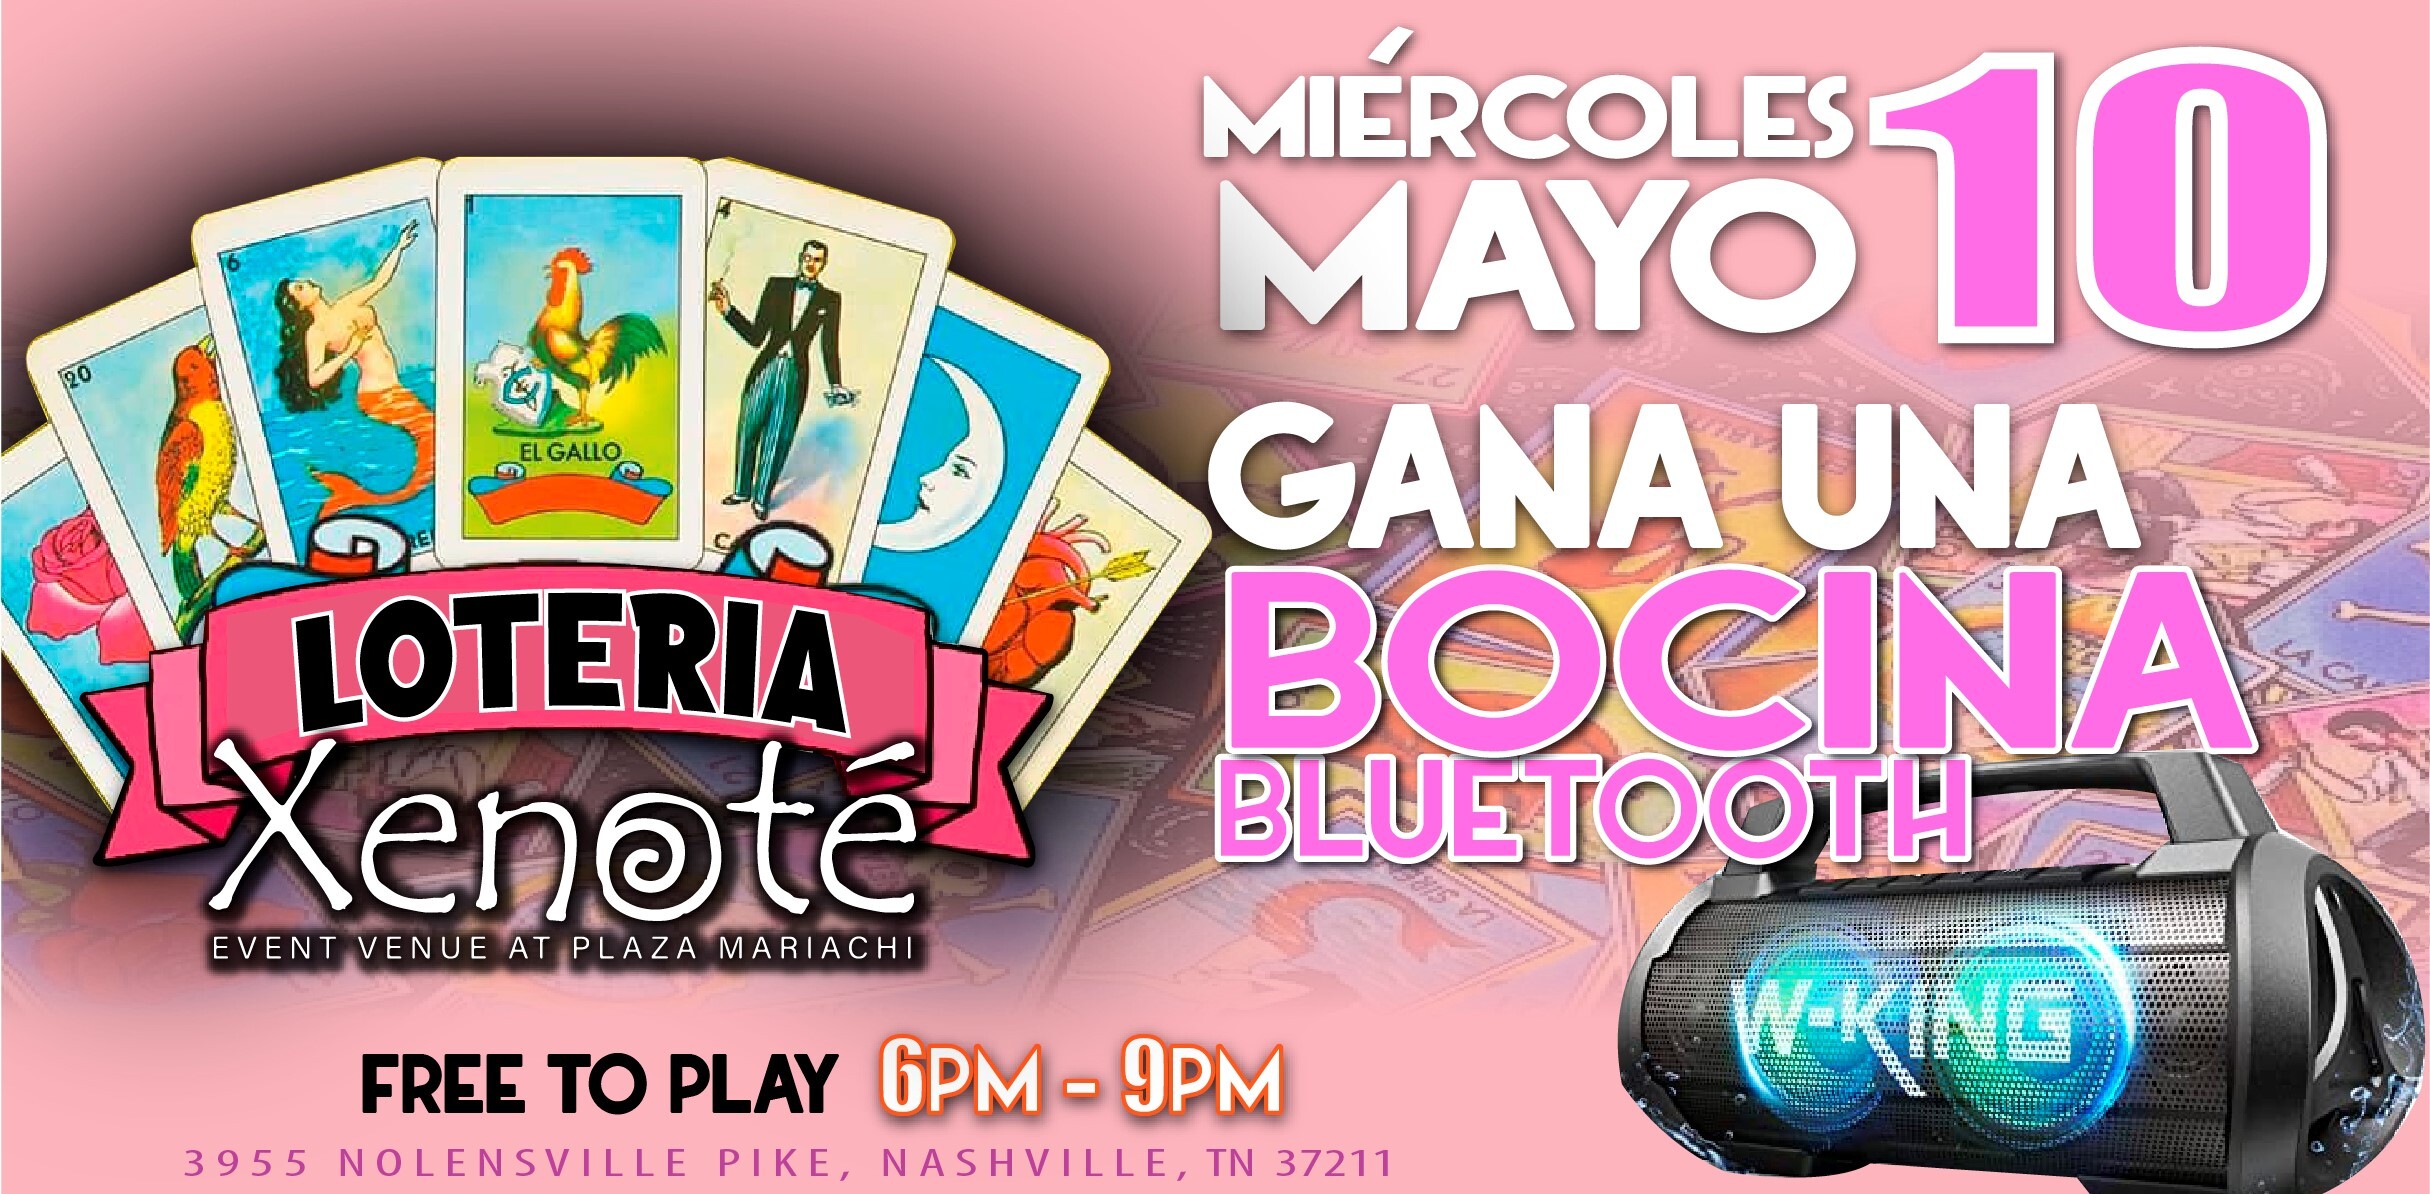 Loteria Night - Plaza Mariachi - Play Mexican Bingo!